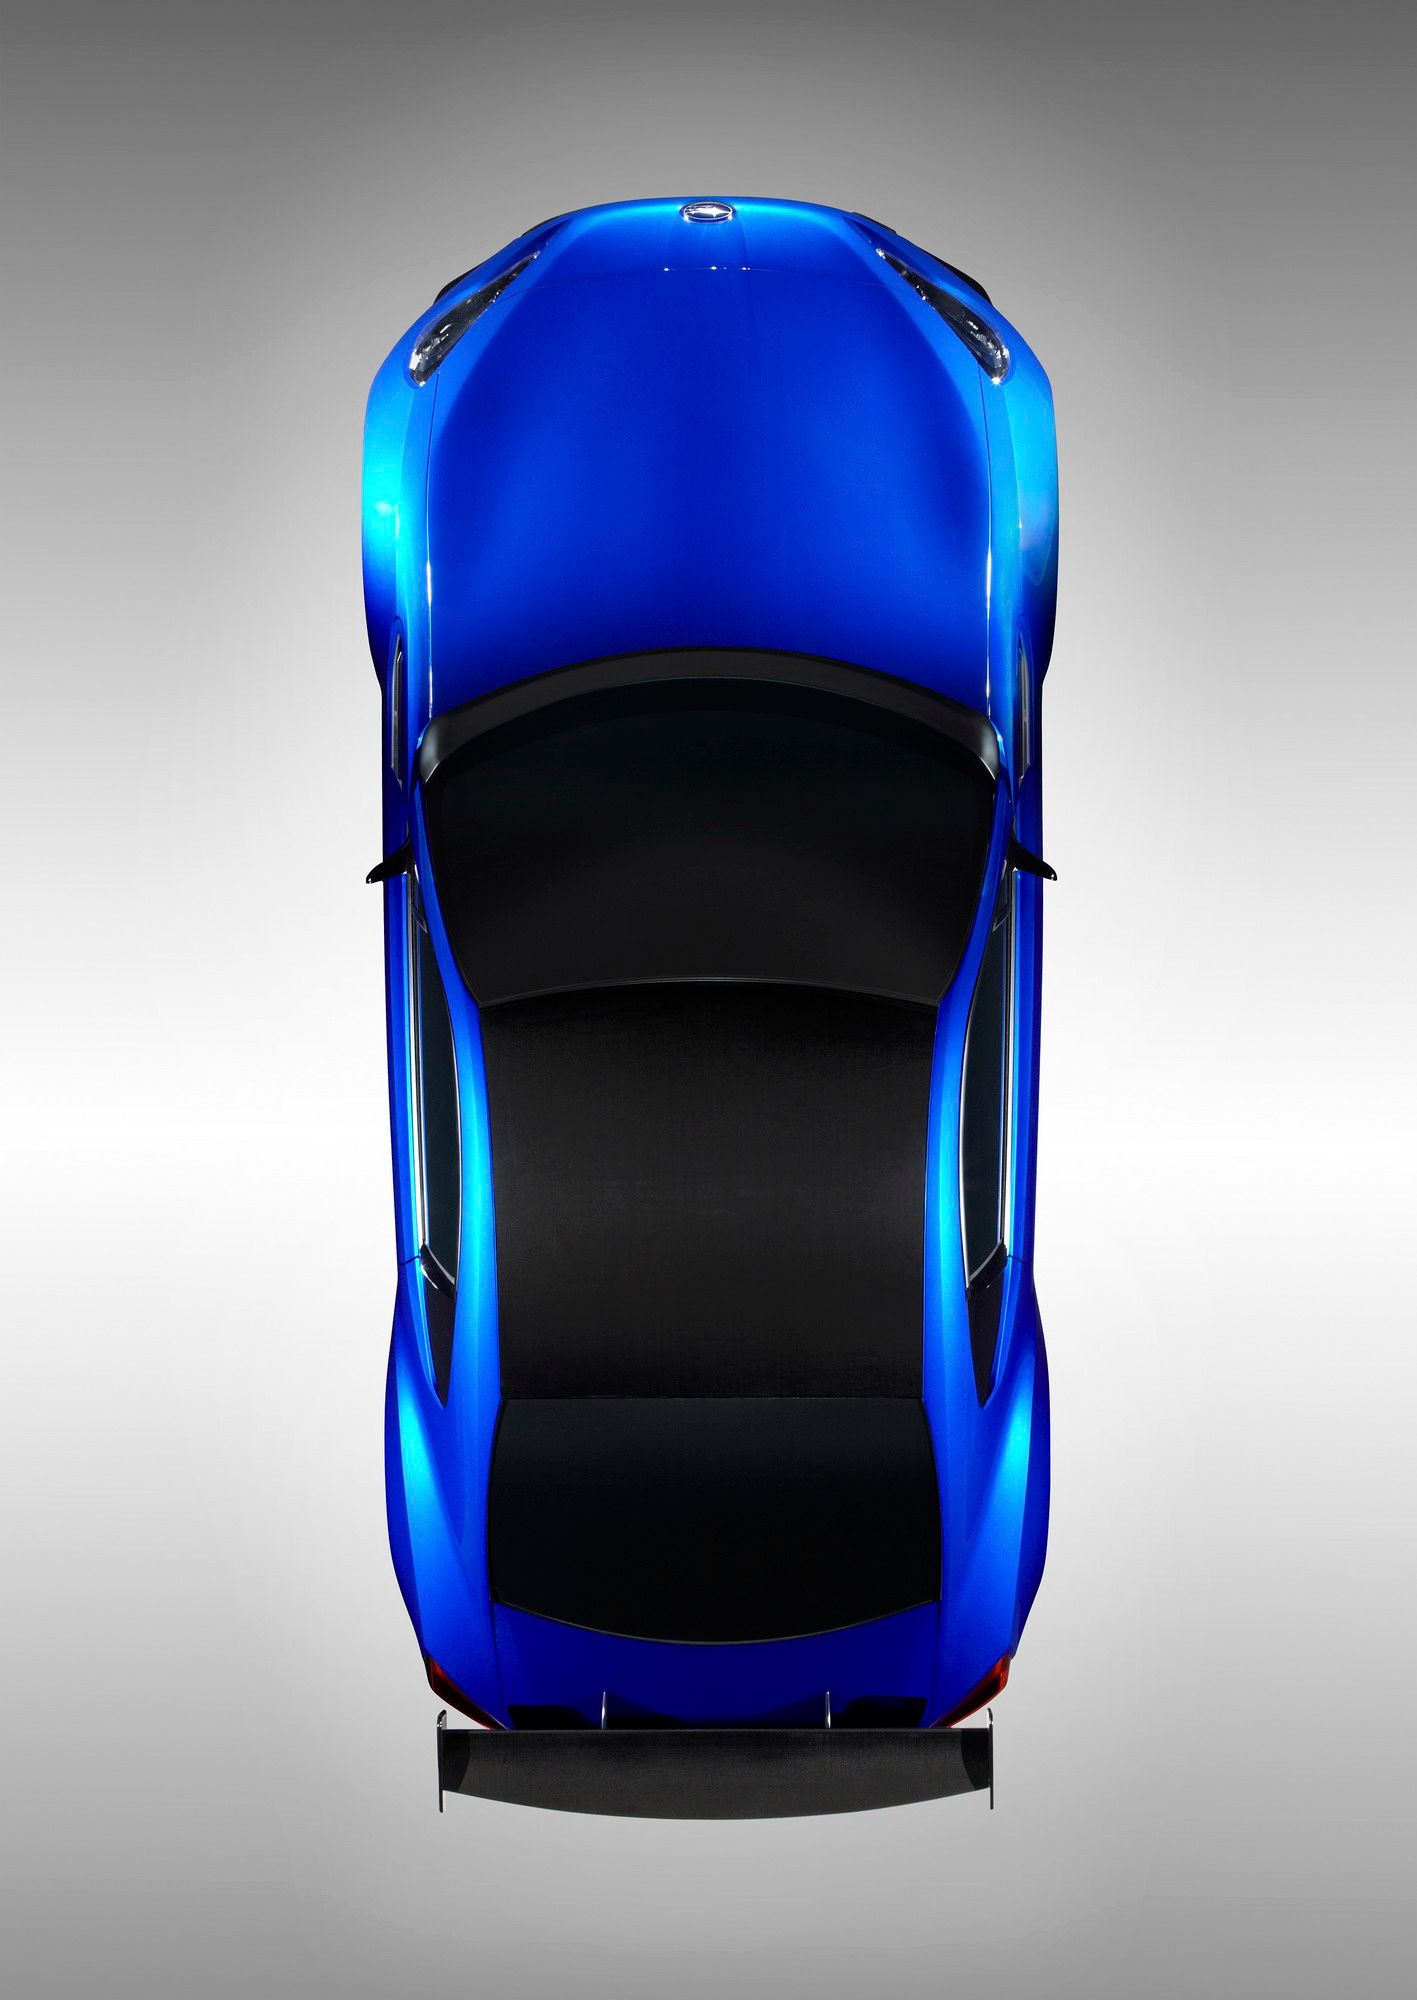 2012 Subaru BRZ Concept STI